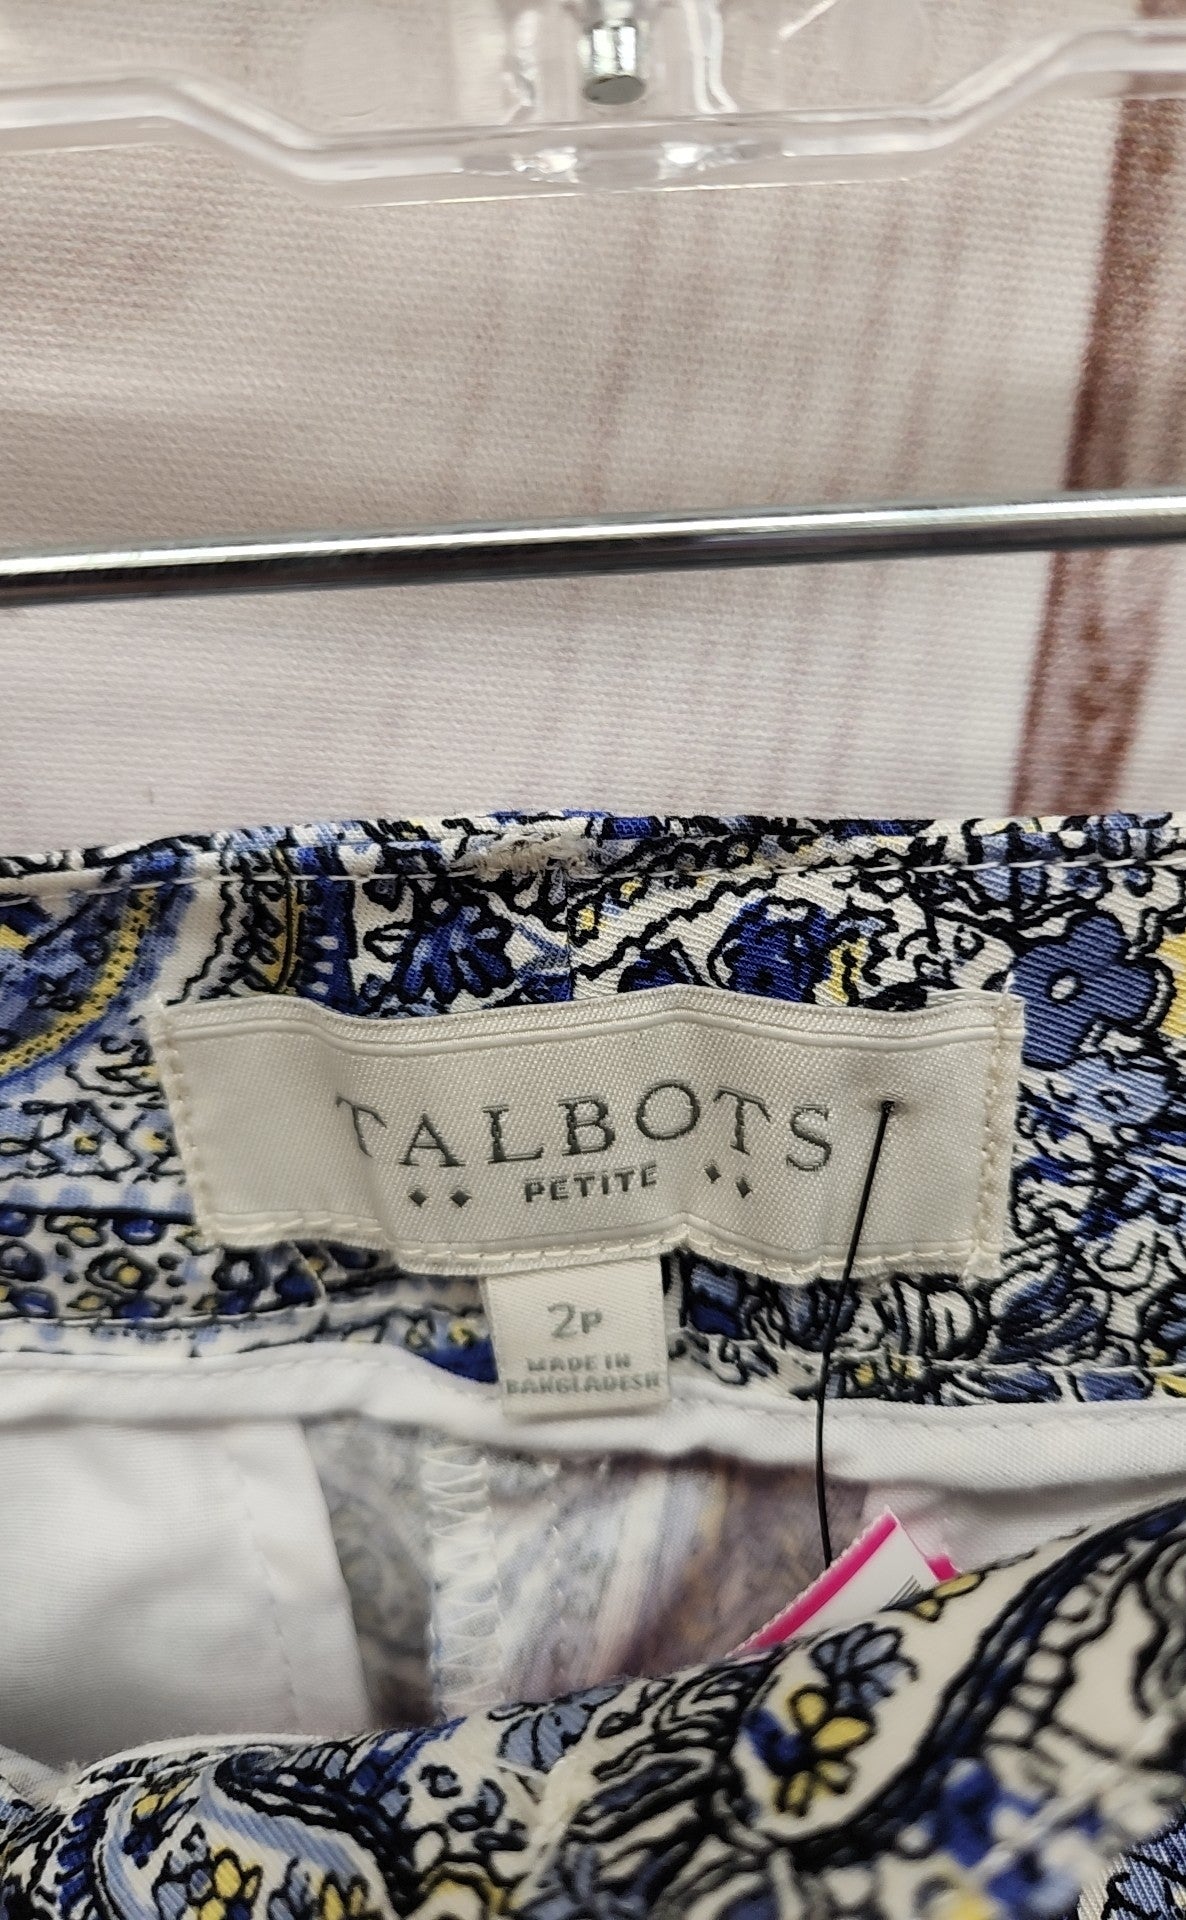 Talbots Women's Size 2 Petite Blue Paisley Pants